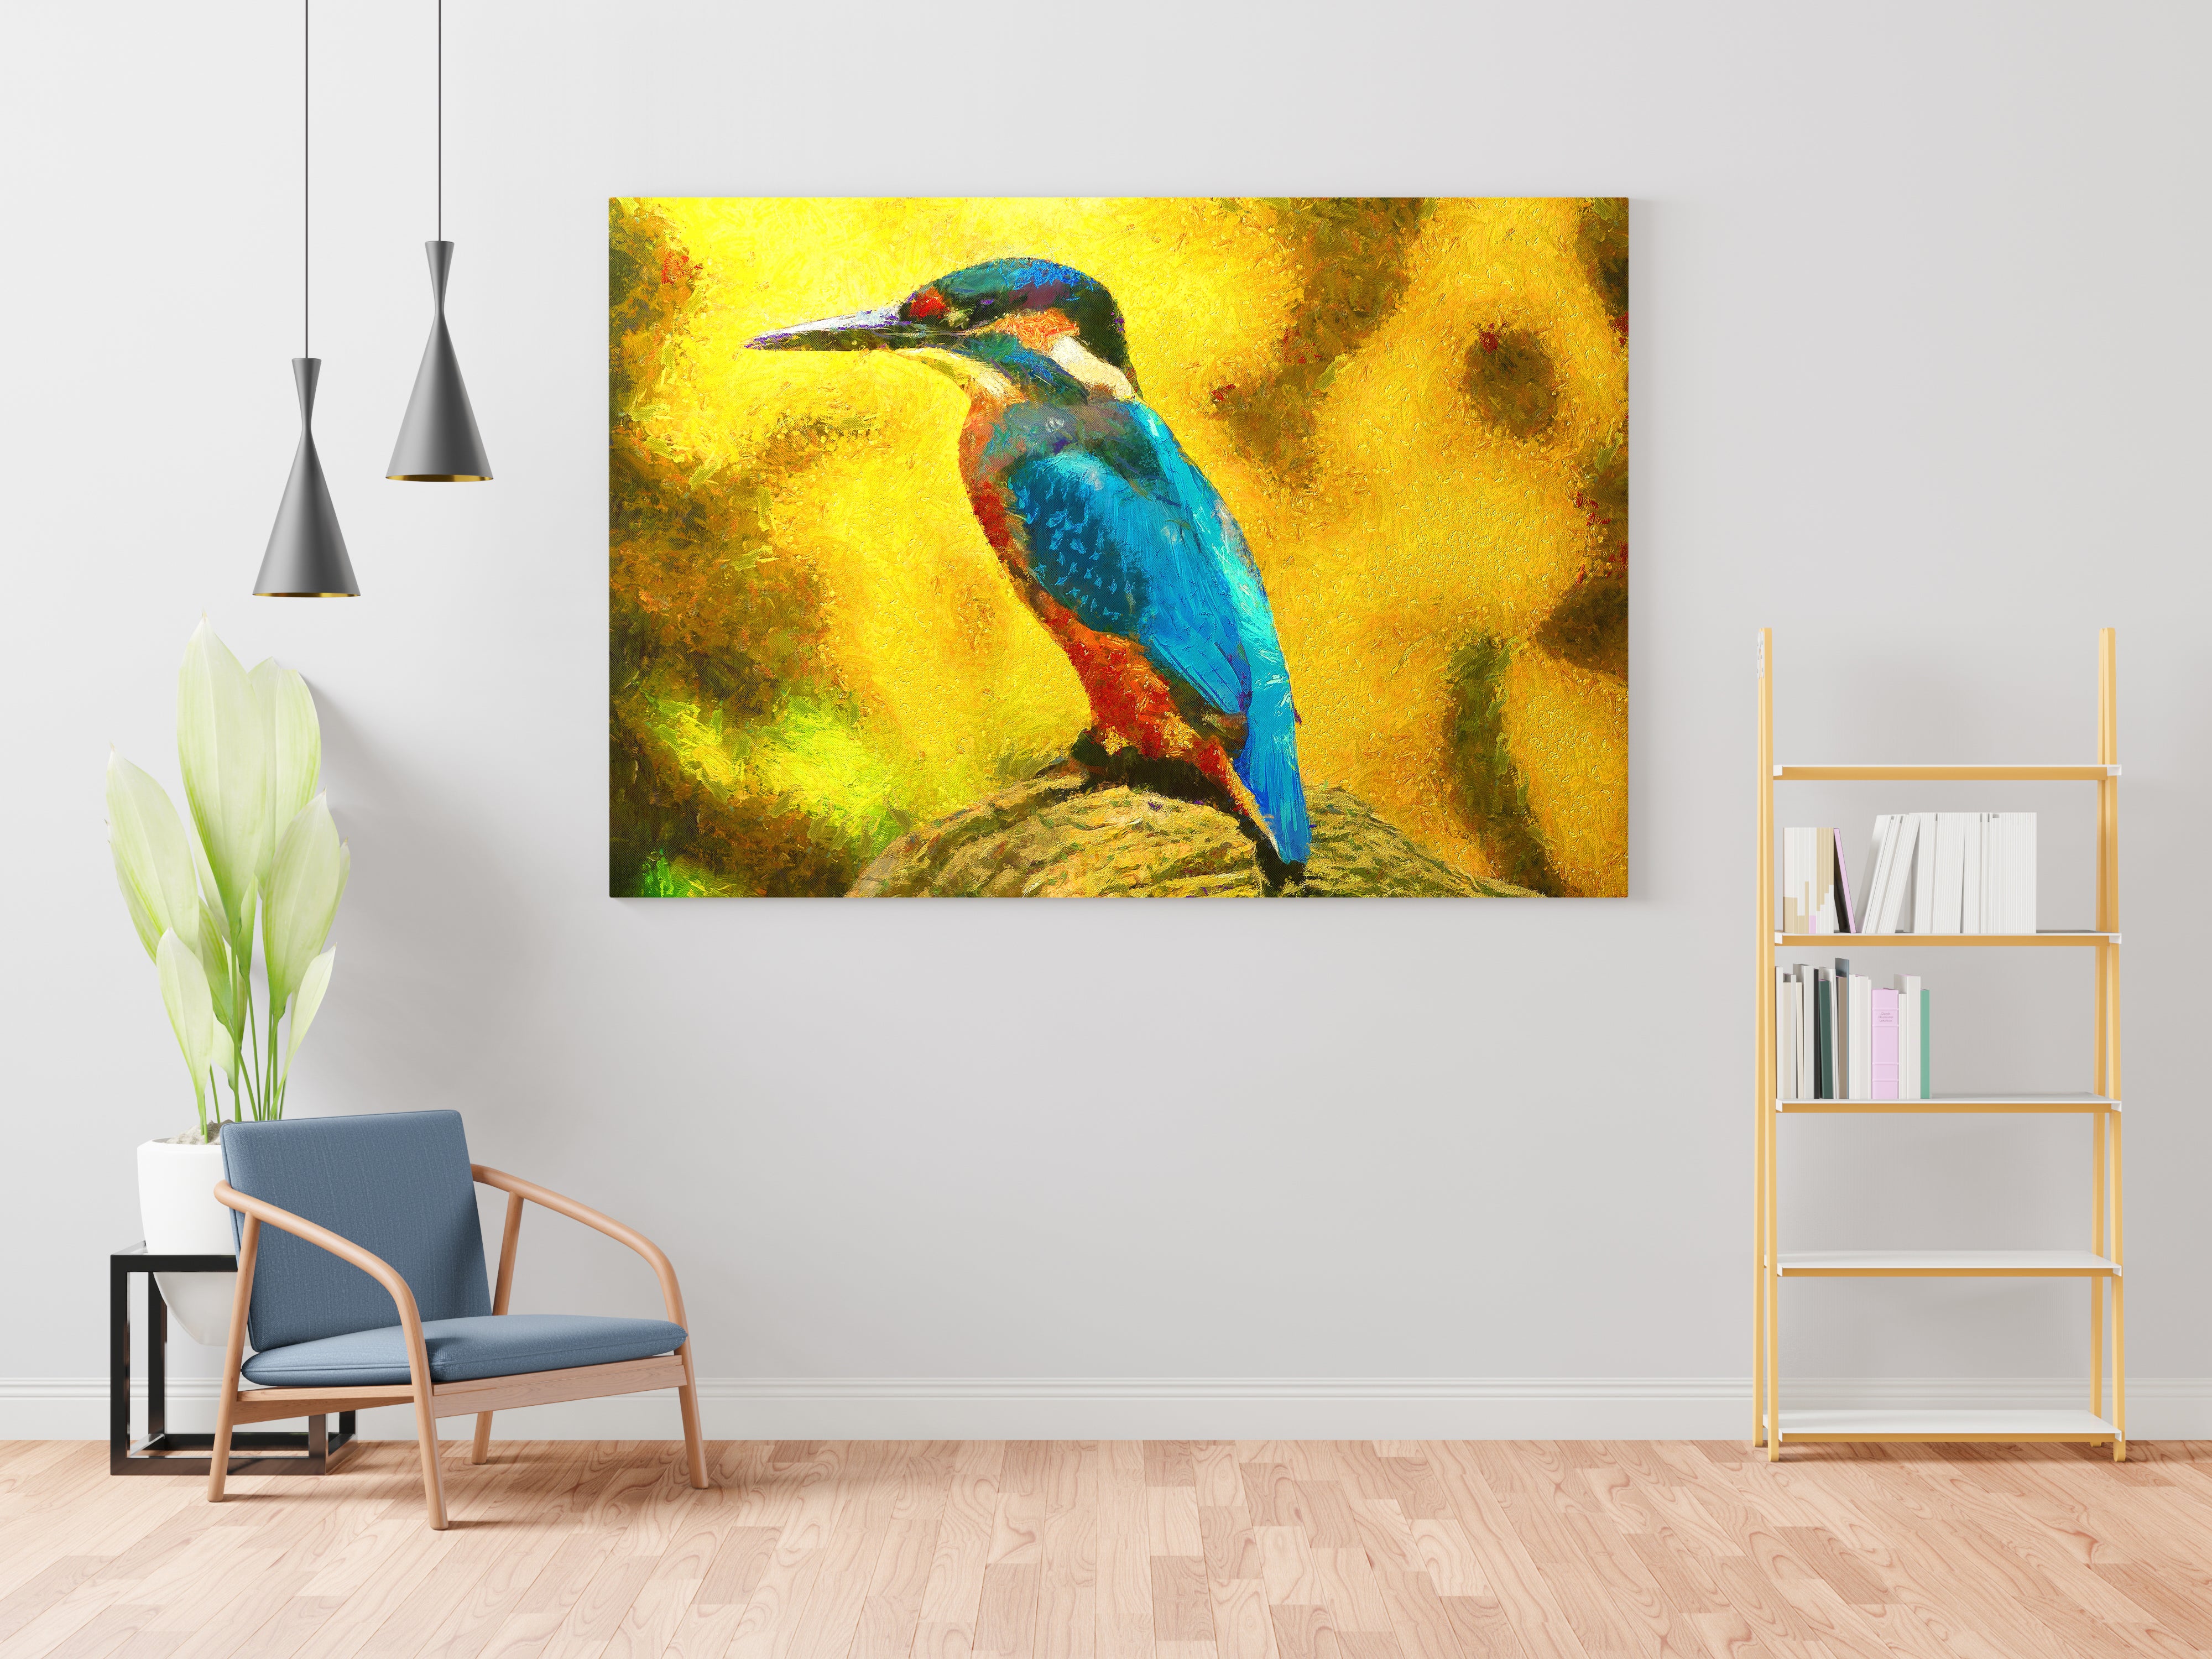 Kingfisher Bird Canvas Wall Painting